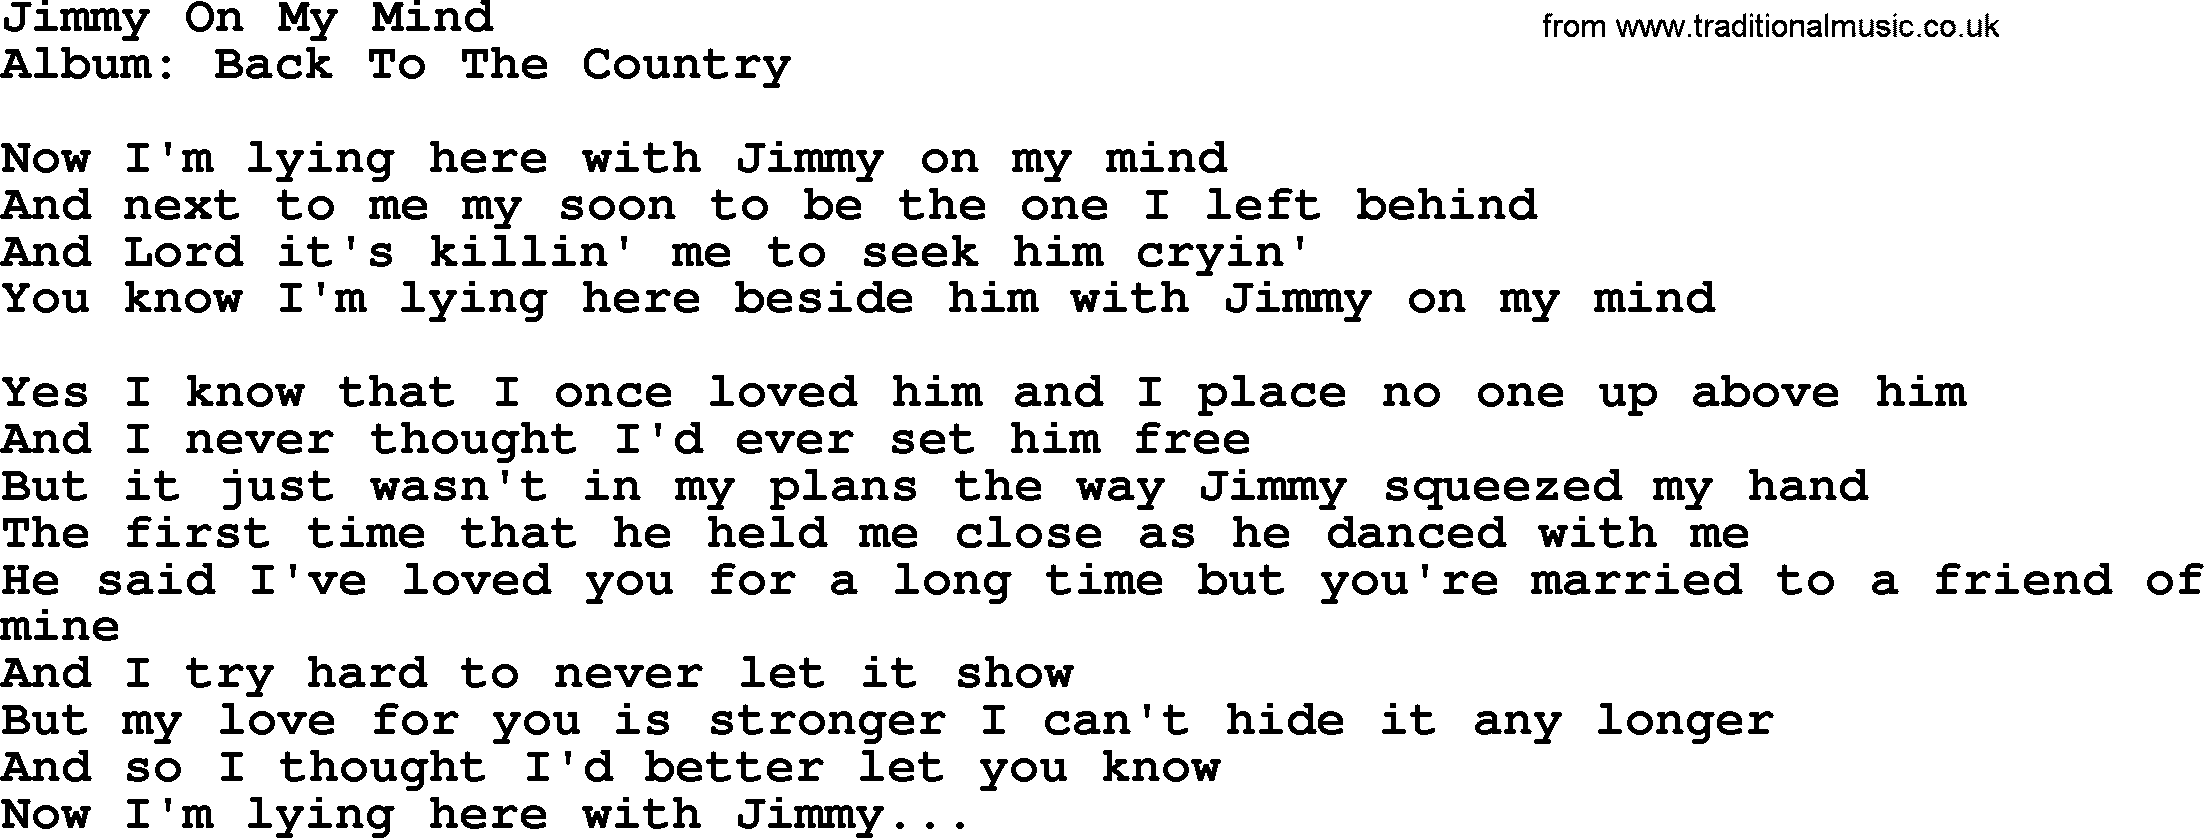 Loretta Lynn song: Jimmy On My Mind lyrics